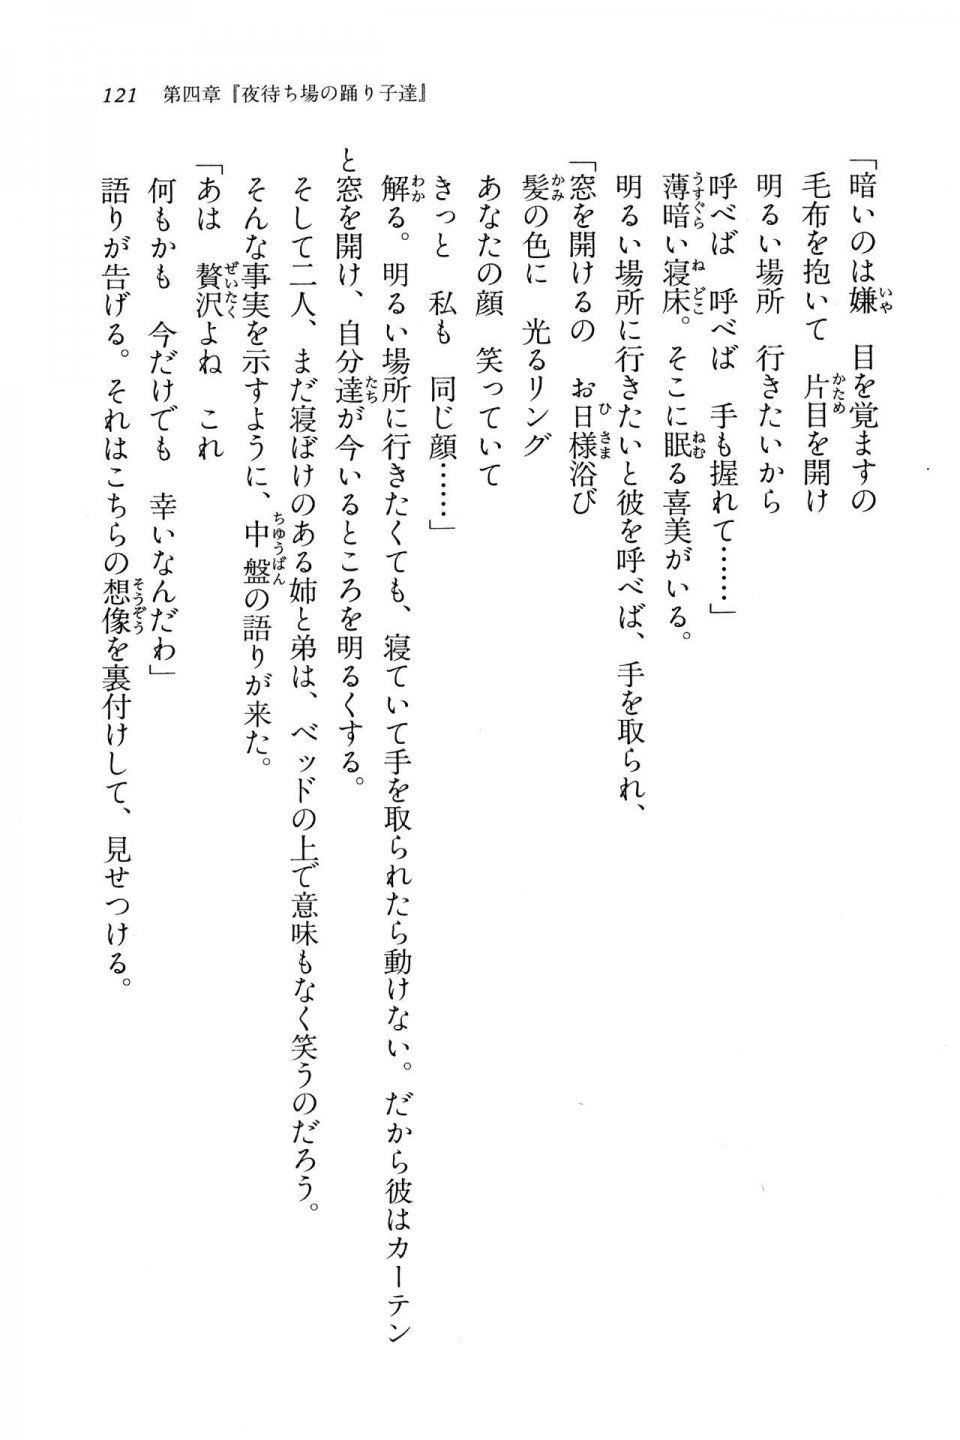 Kyoukai Senjou no Horizon BD Special Mininovel Vol 7(4A) - Photo #125